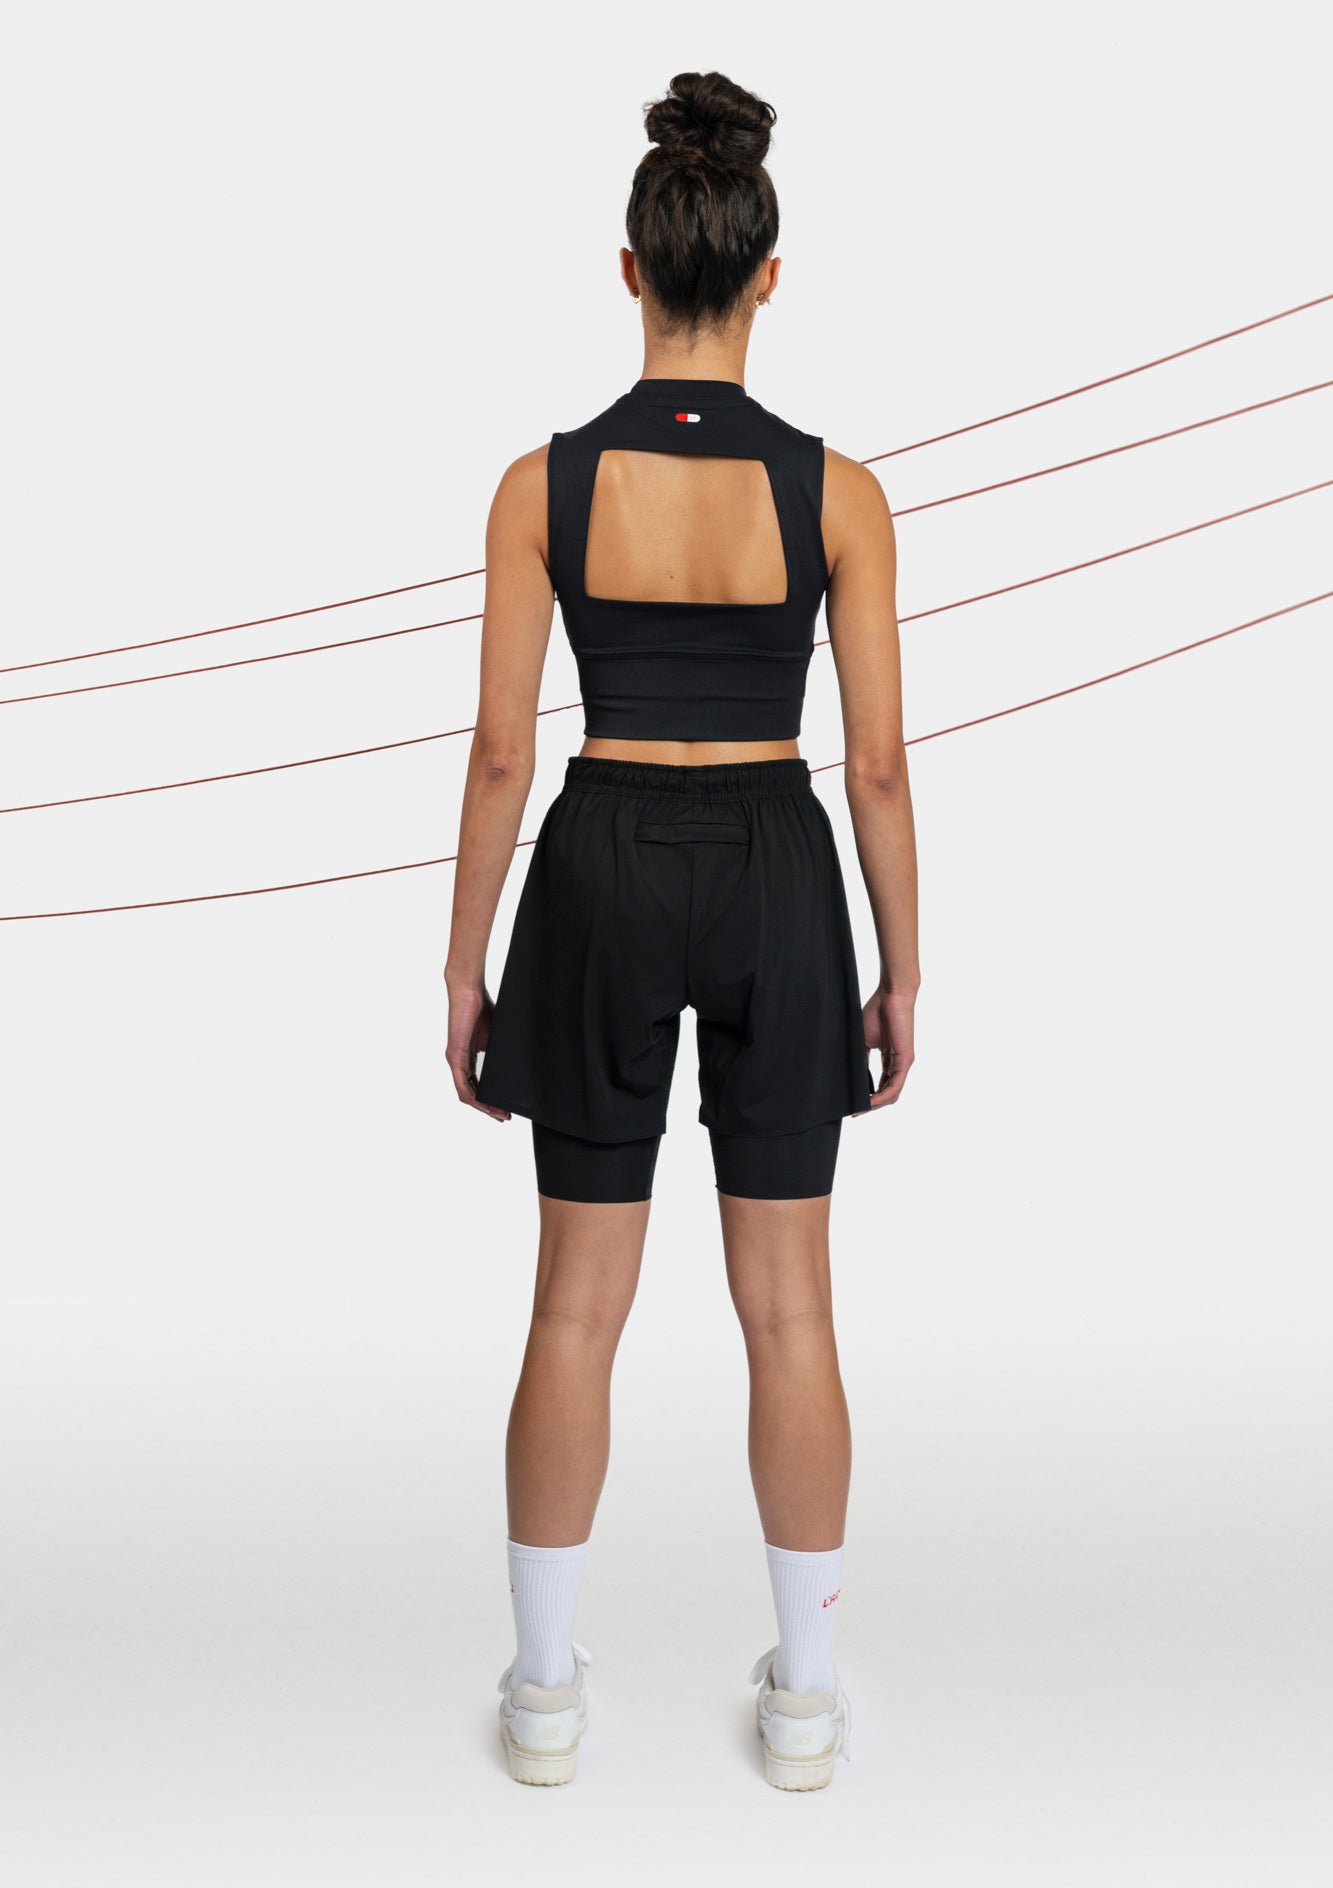 women's black running shorts back